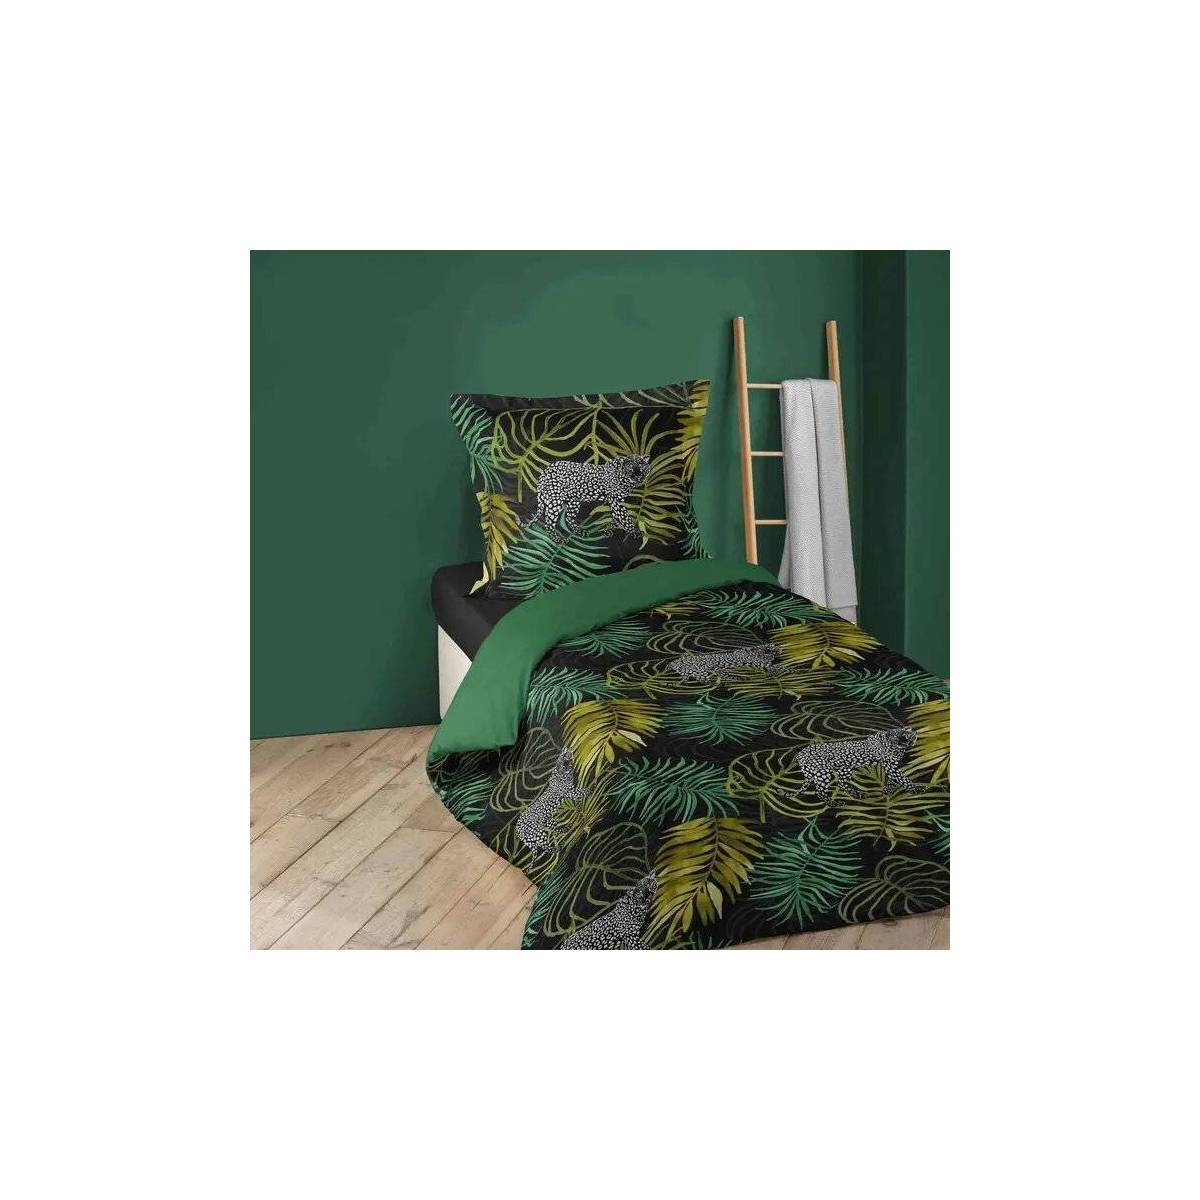 Tropical Green duvet cover 140 x 200 cm green